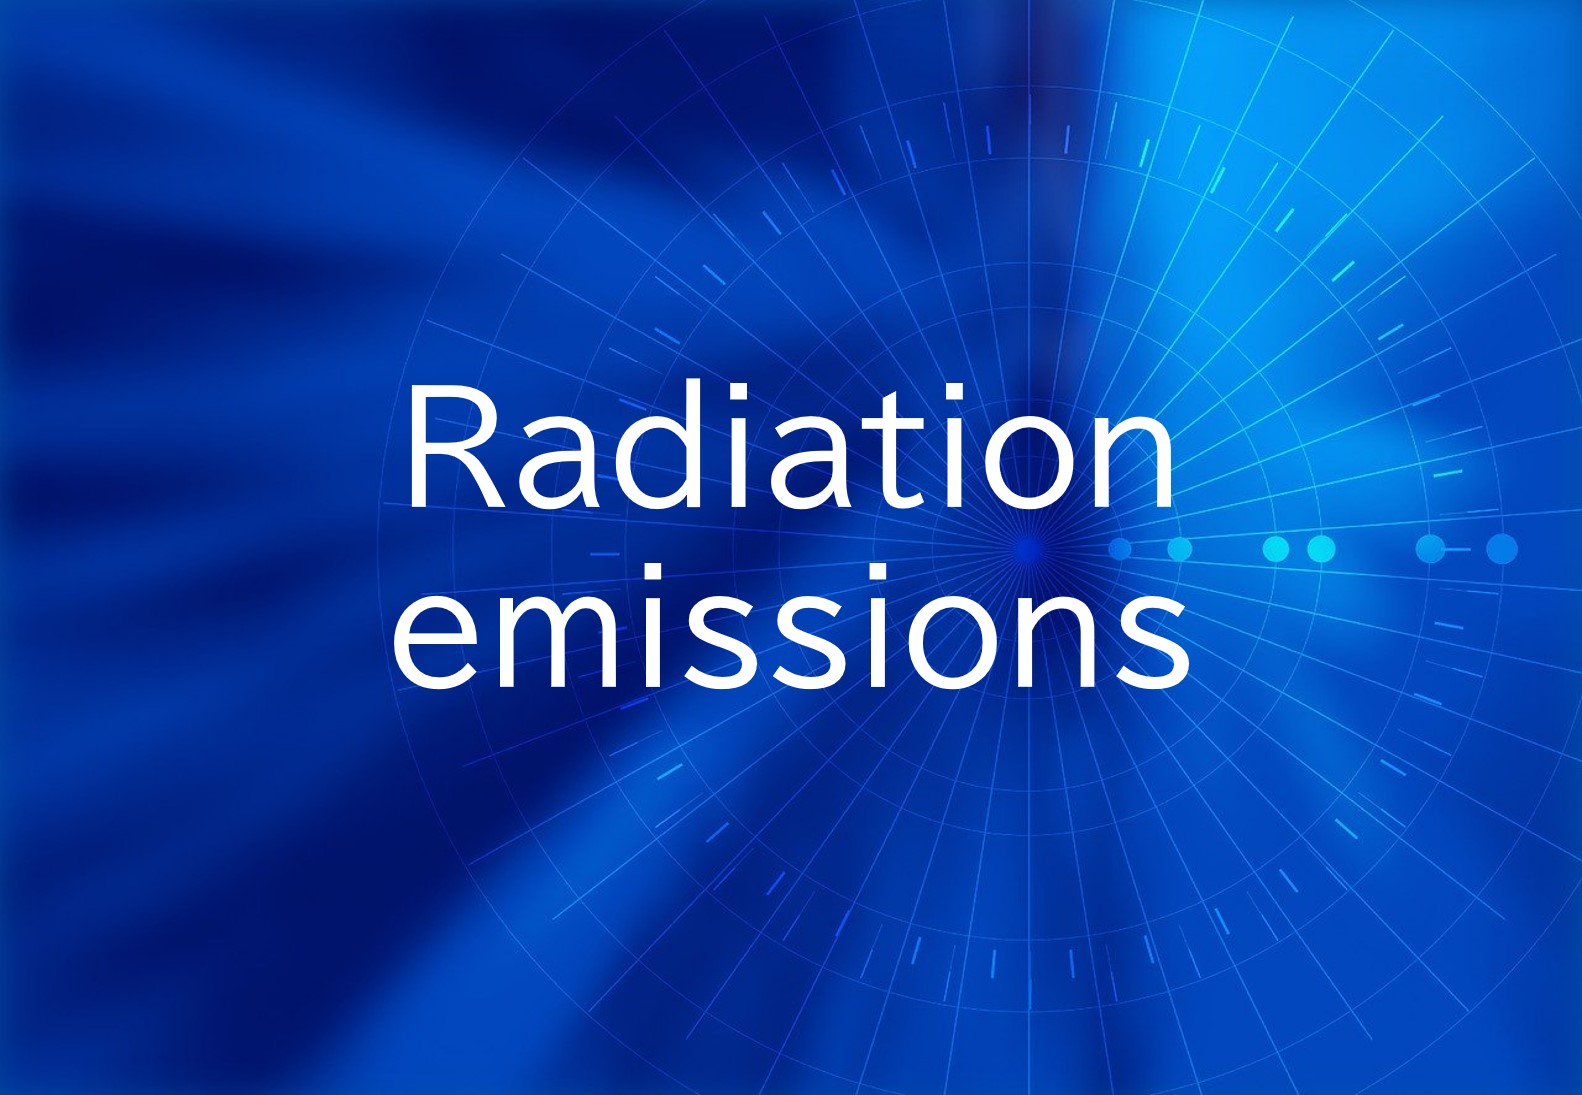 Radiation emissions